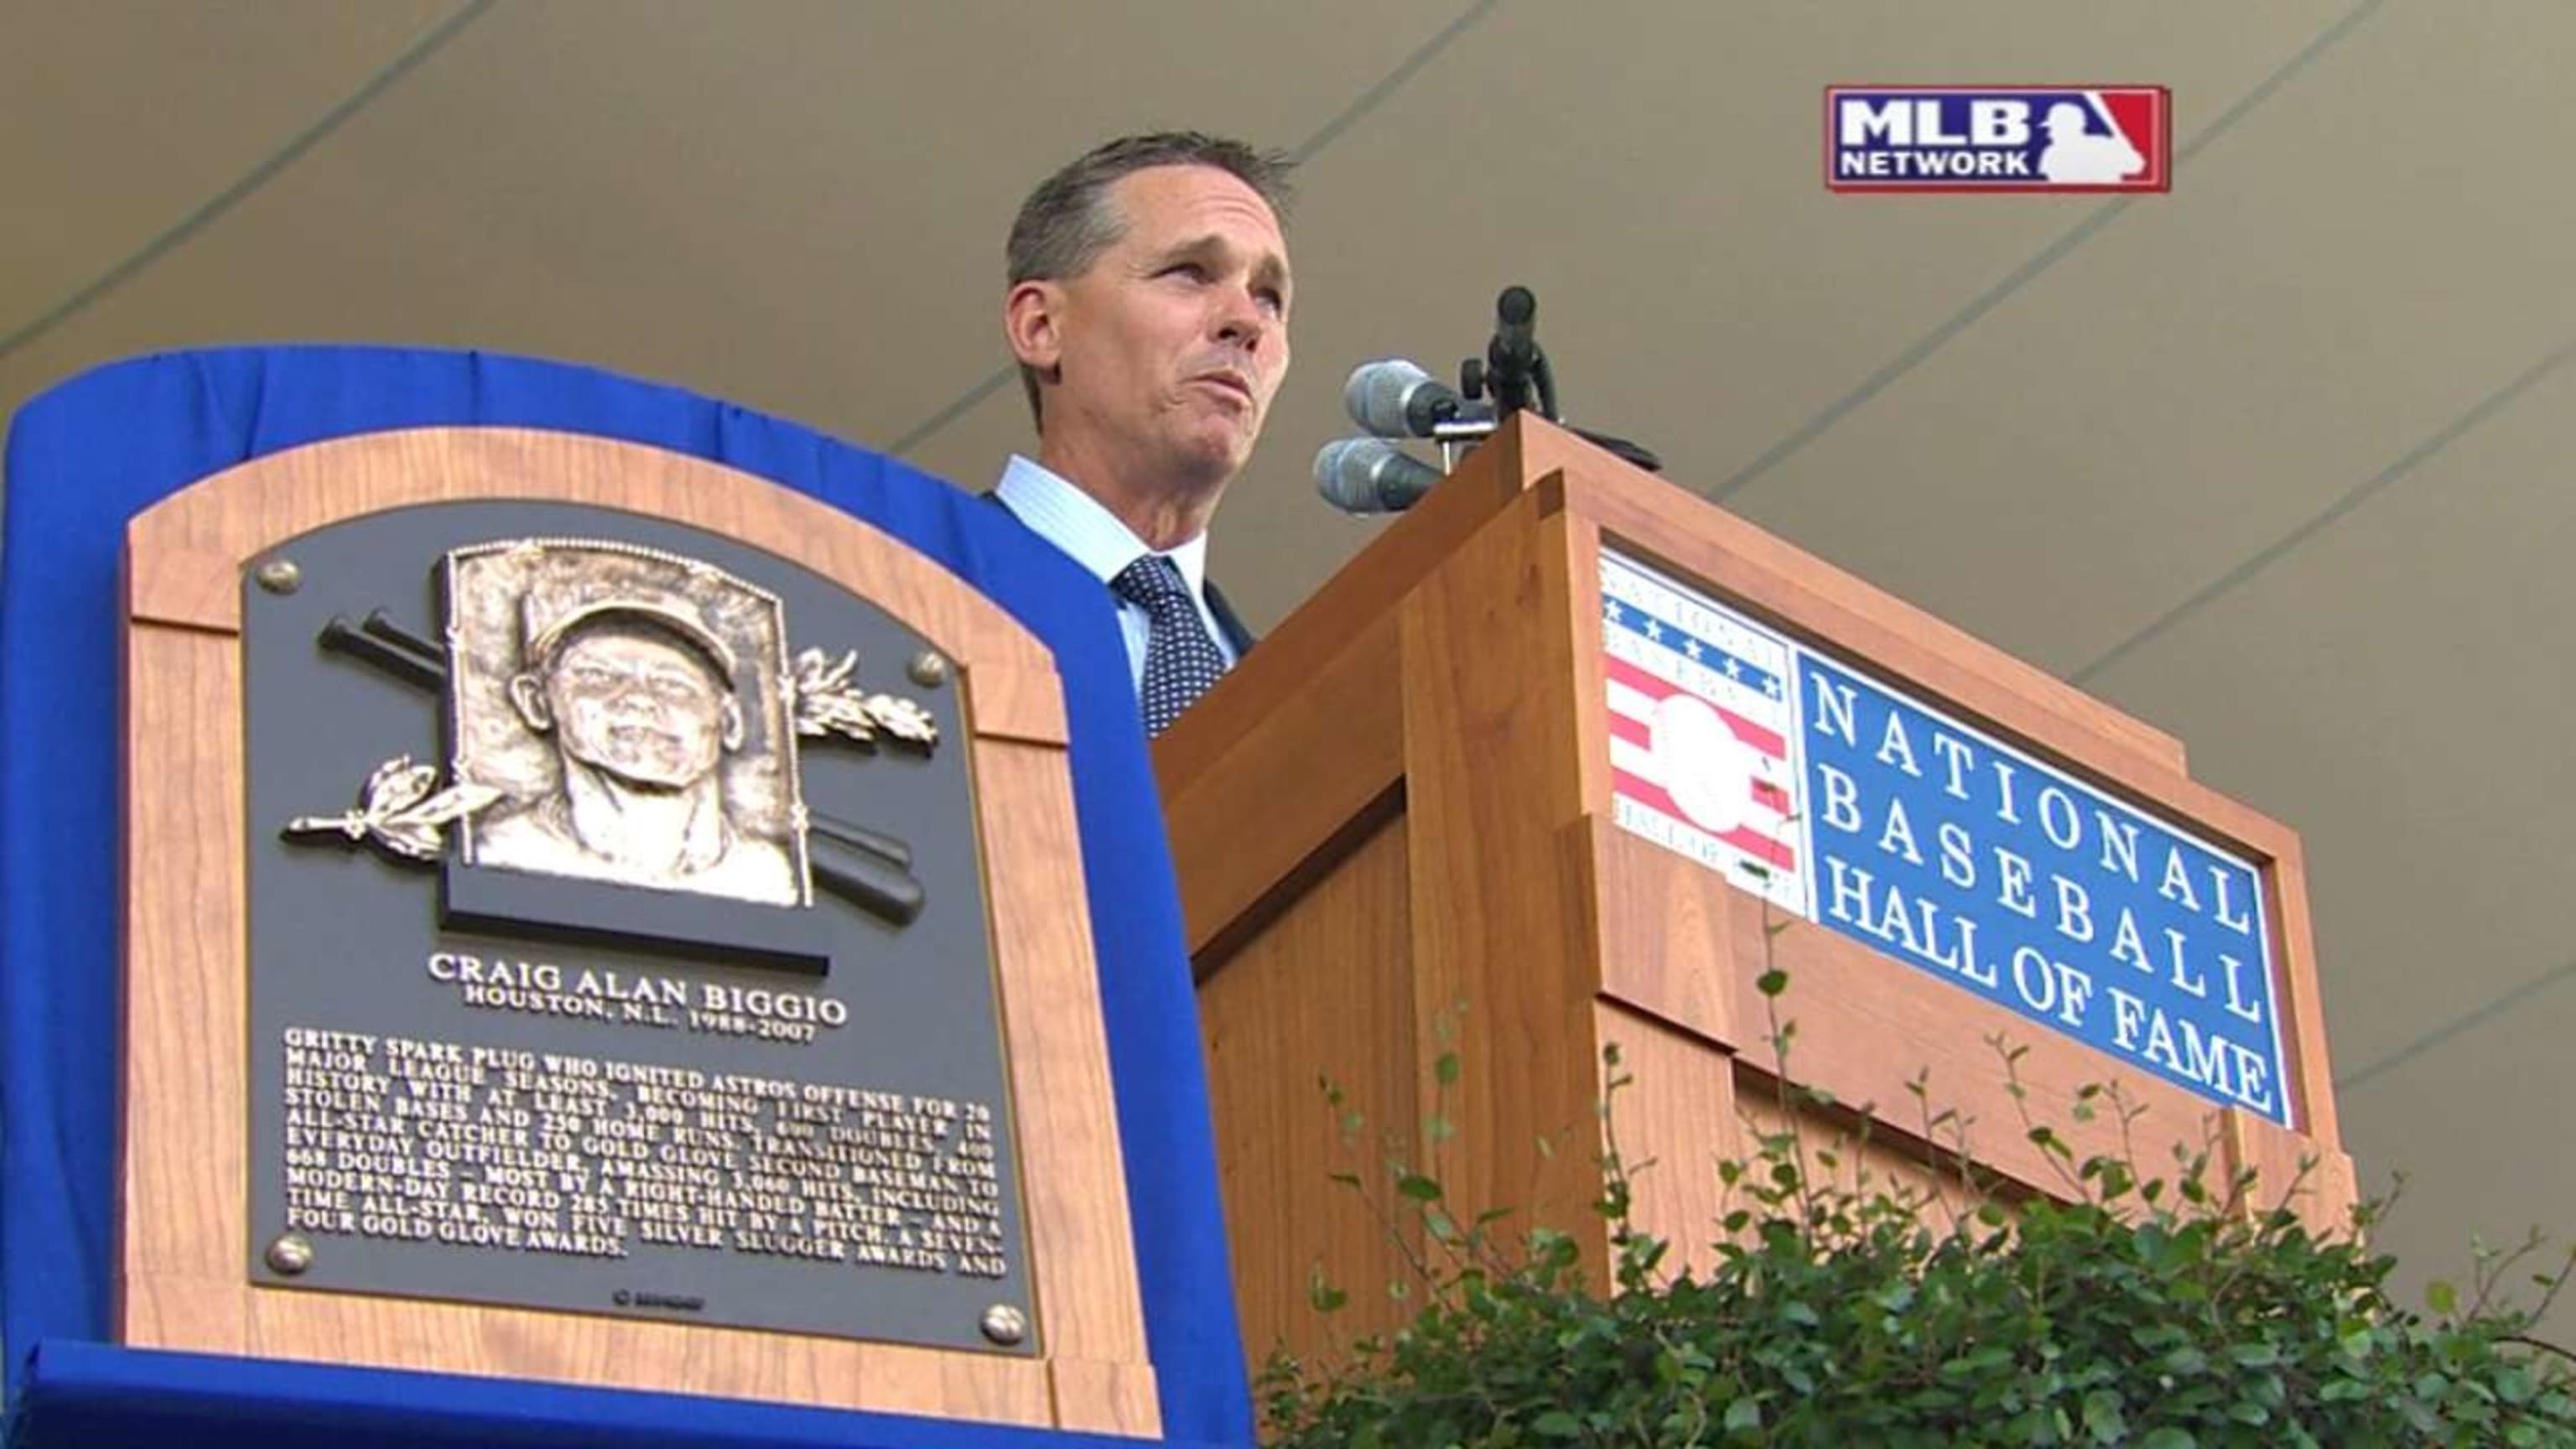 Houston Astros on X: Craig Biggio's @BaseballHall plaque is